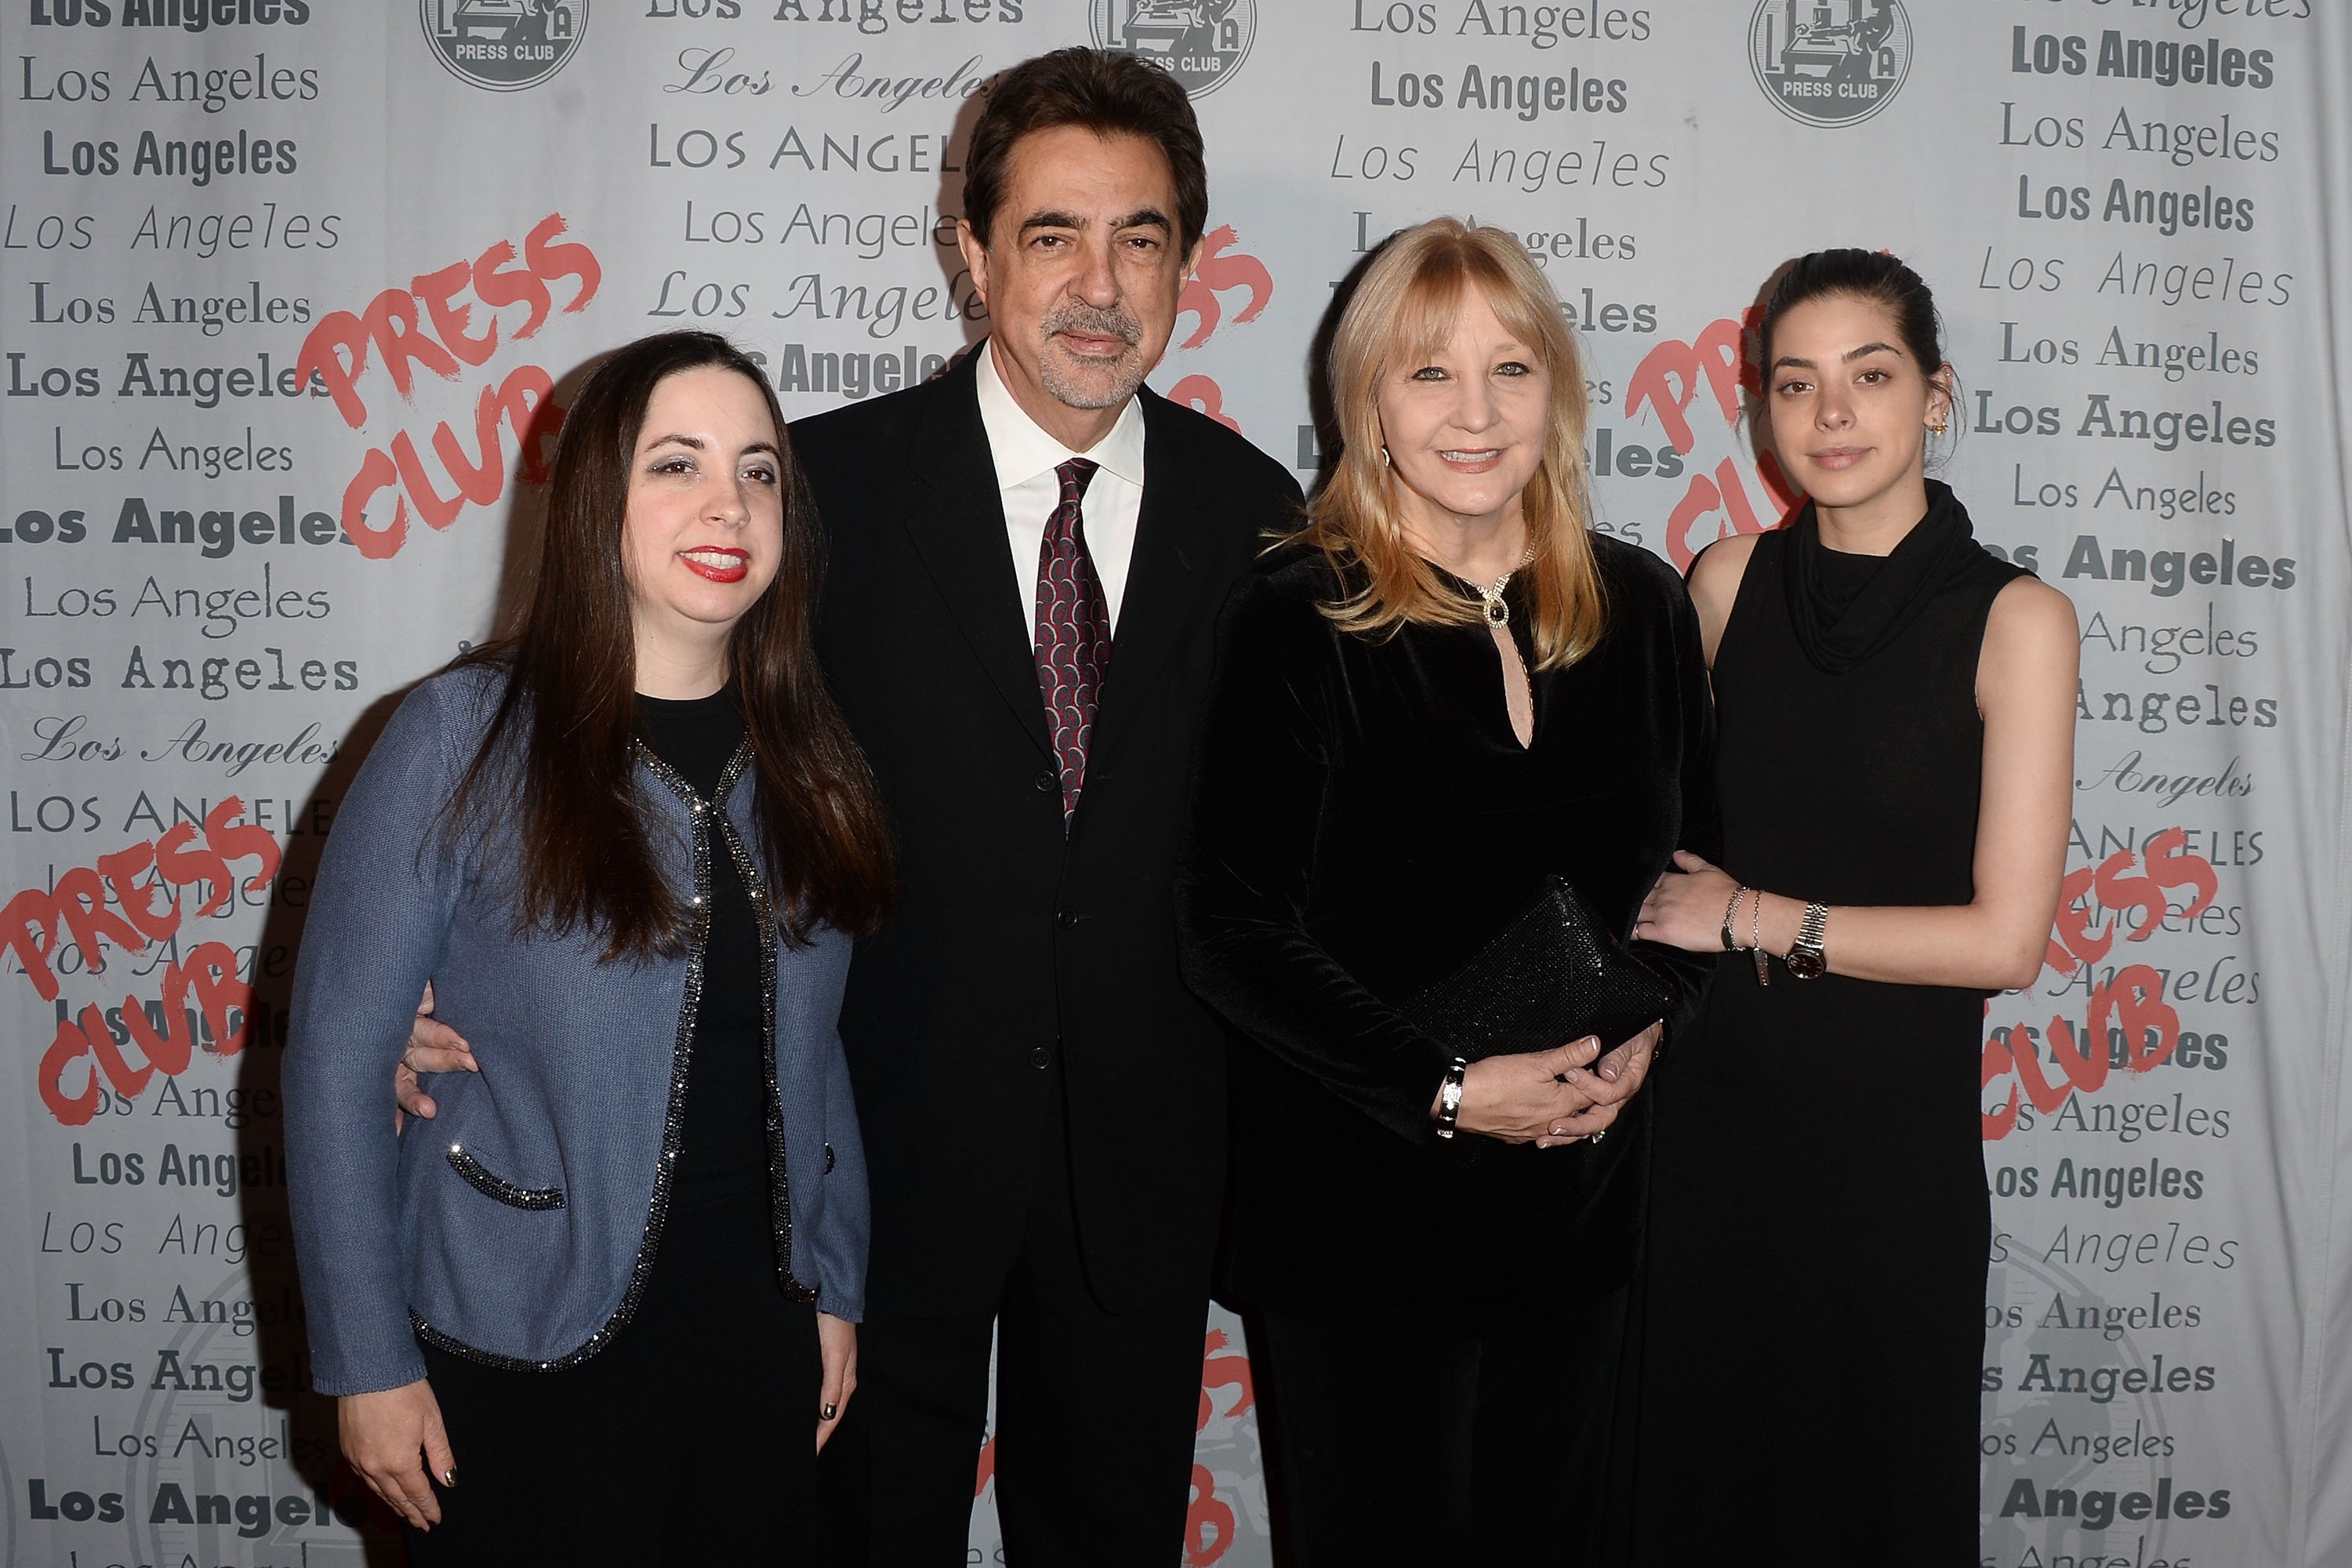 Mia Mantegna, Joe Mantegna, Arlene Vrhel, and Gia Mantegna at the National Arts and Entertainment Journalism Awards Gala on December 6, 2015 | Source: Getty Images